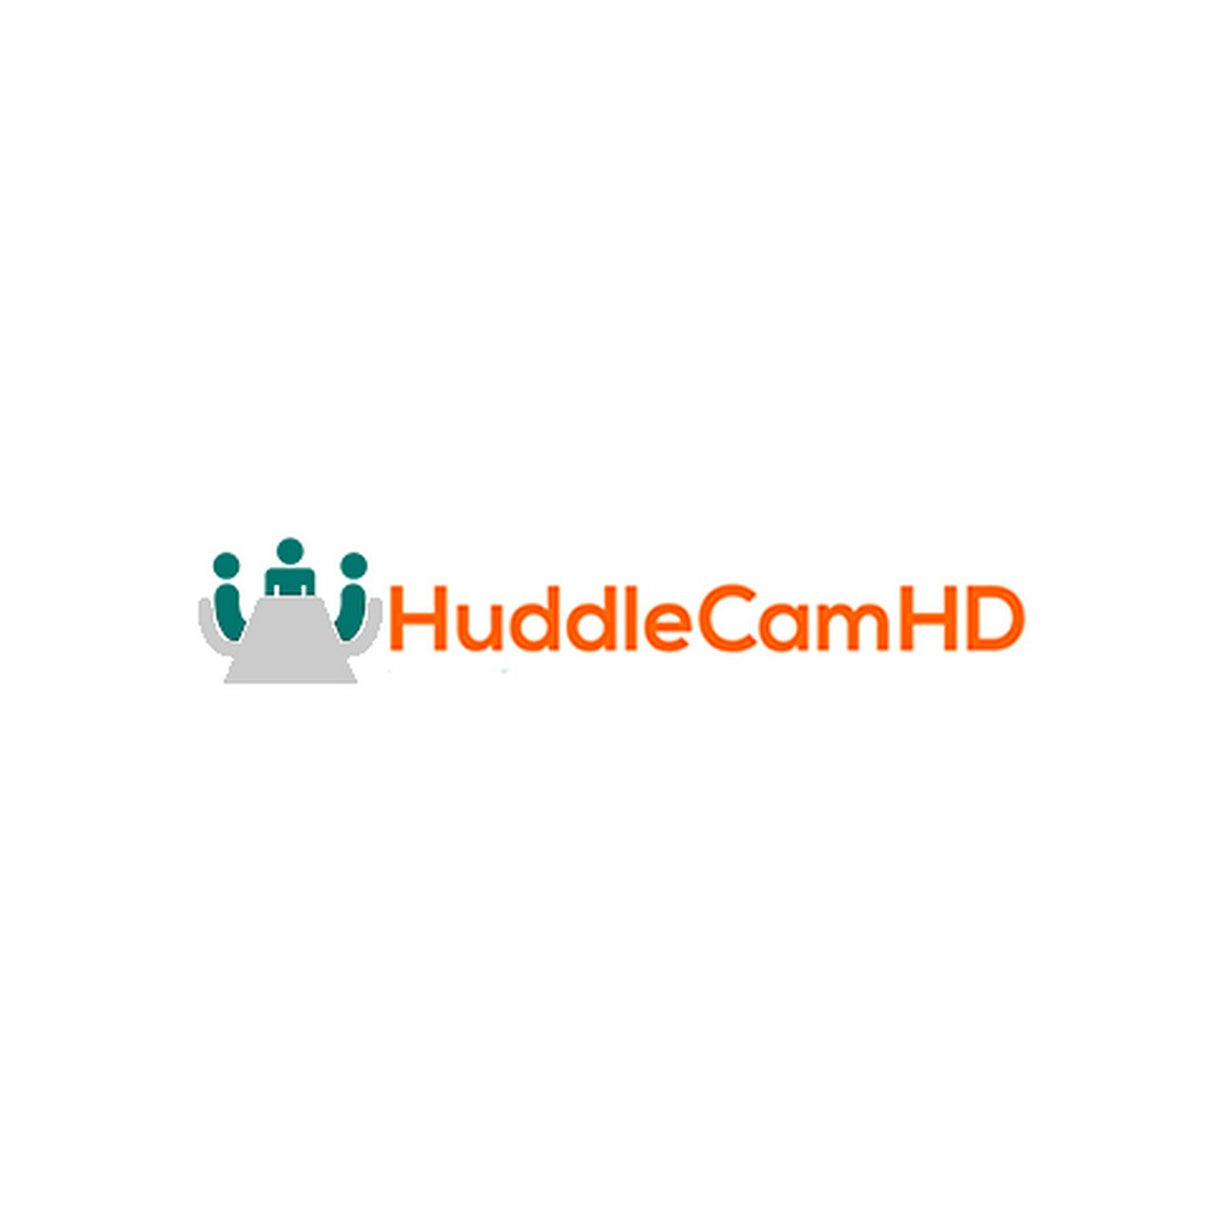 HuddleCamHD HC-CNTL-SFT | Visca Camera Control Software for RS 232 USB PTZ Cameras, Download Only